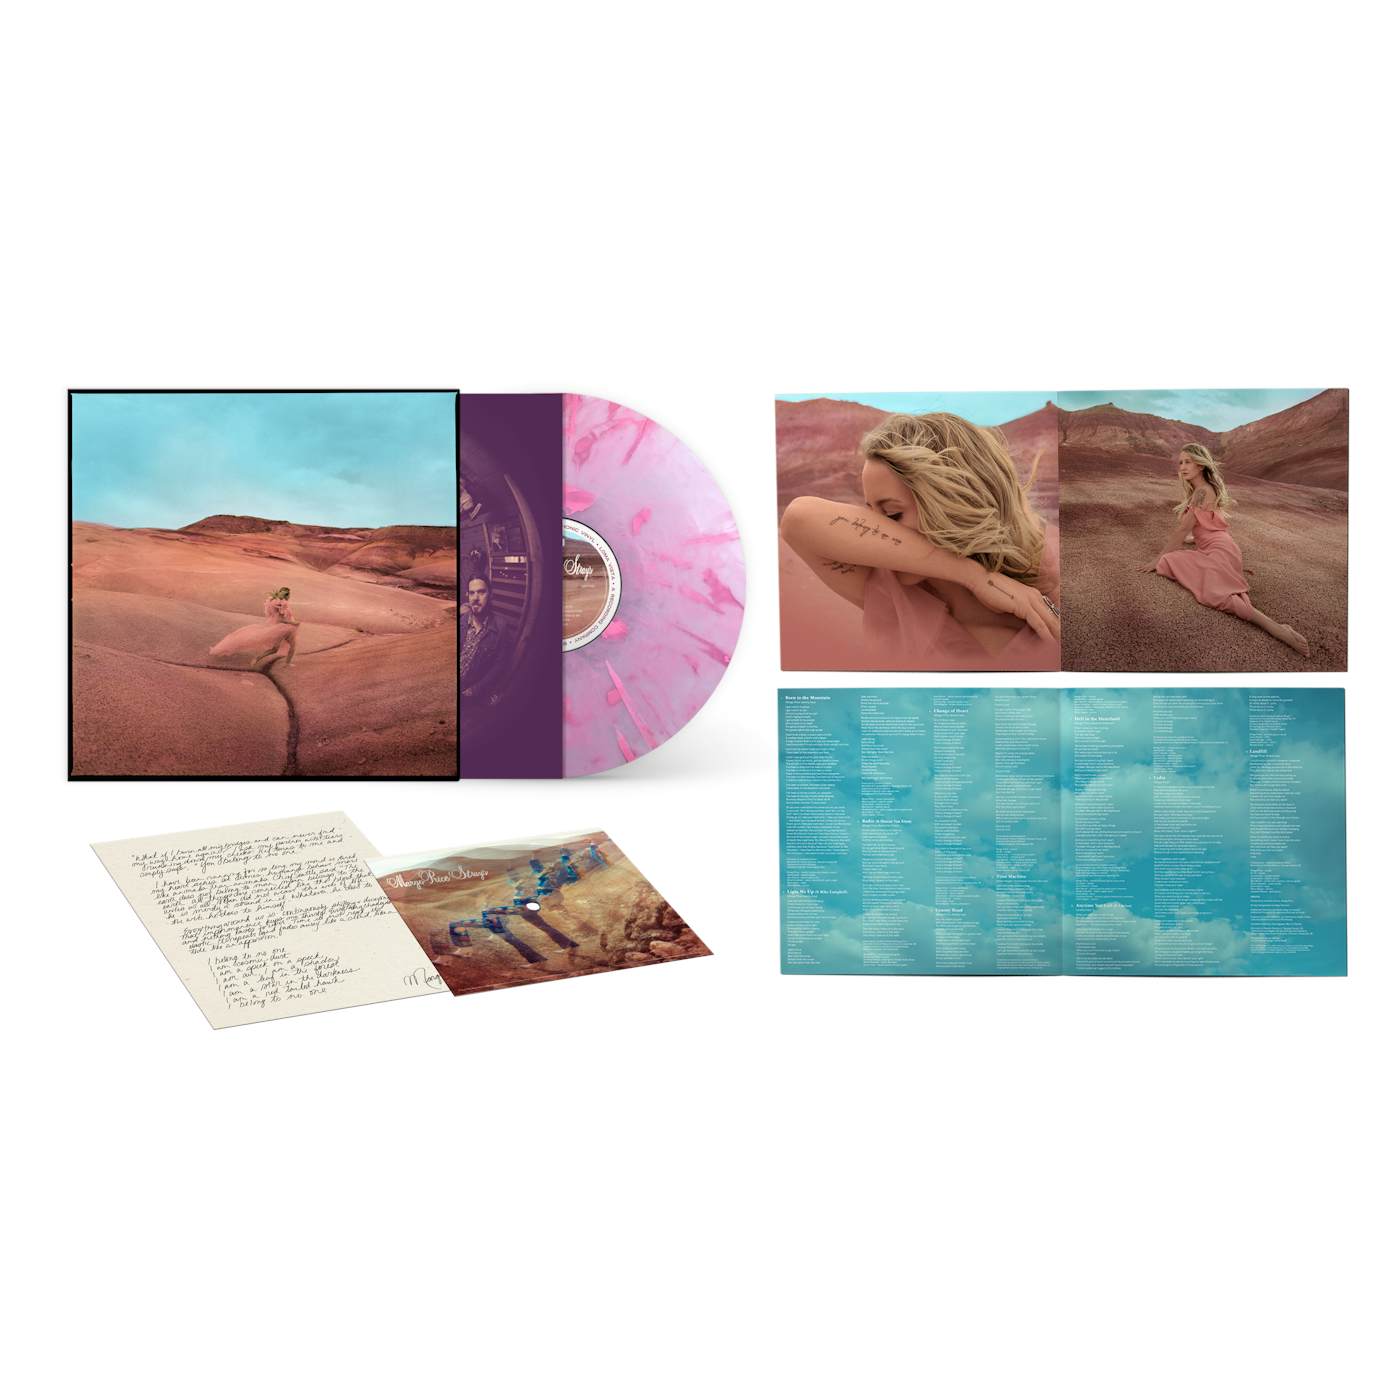 Margo Price Strays Limited Edition Pink Swirl Colored Vinyl w/ Bonus Flexi Vinyl 7" & Signed Poster Insert